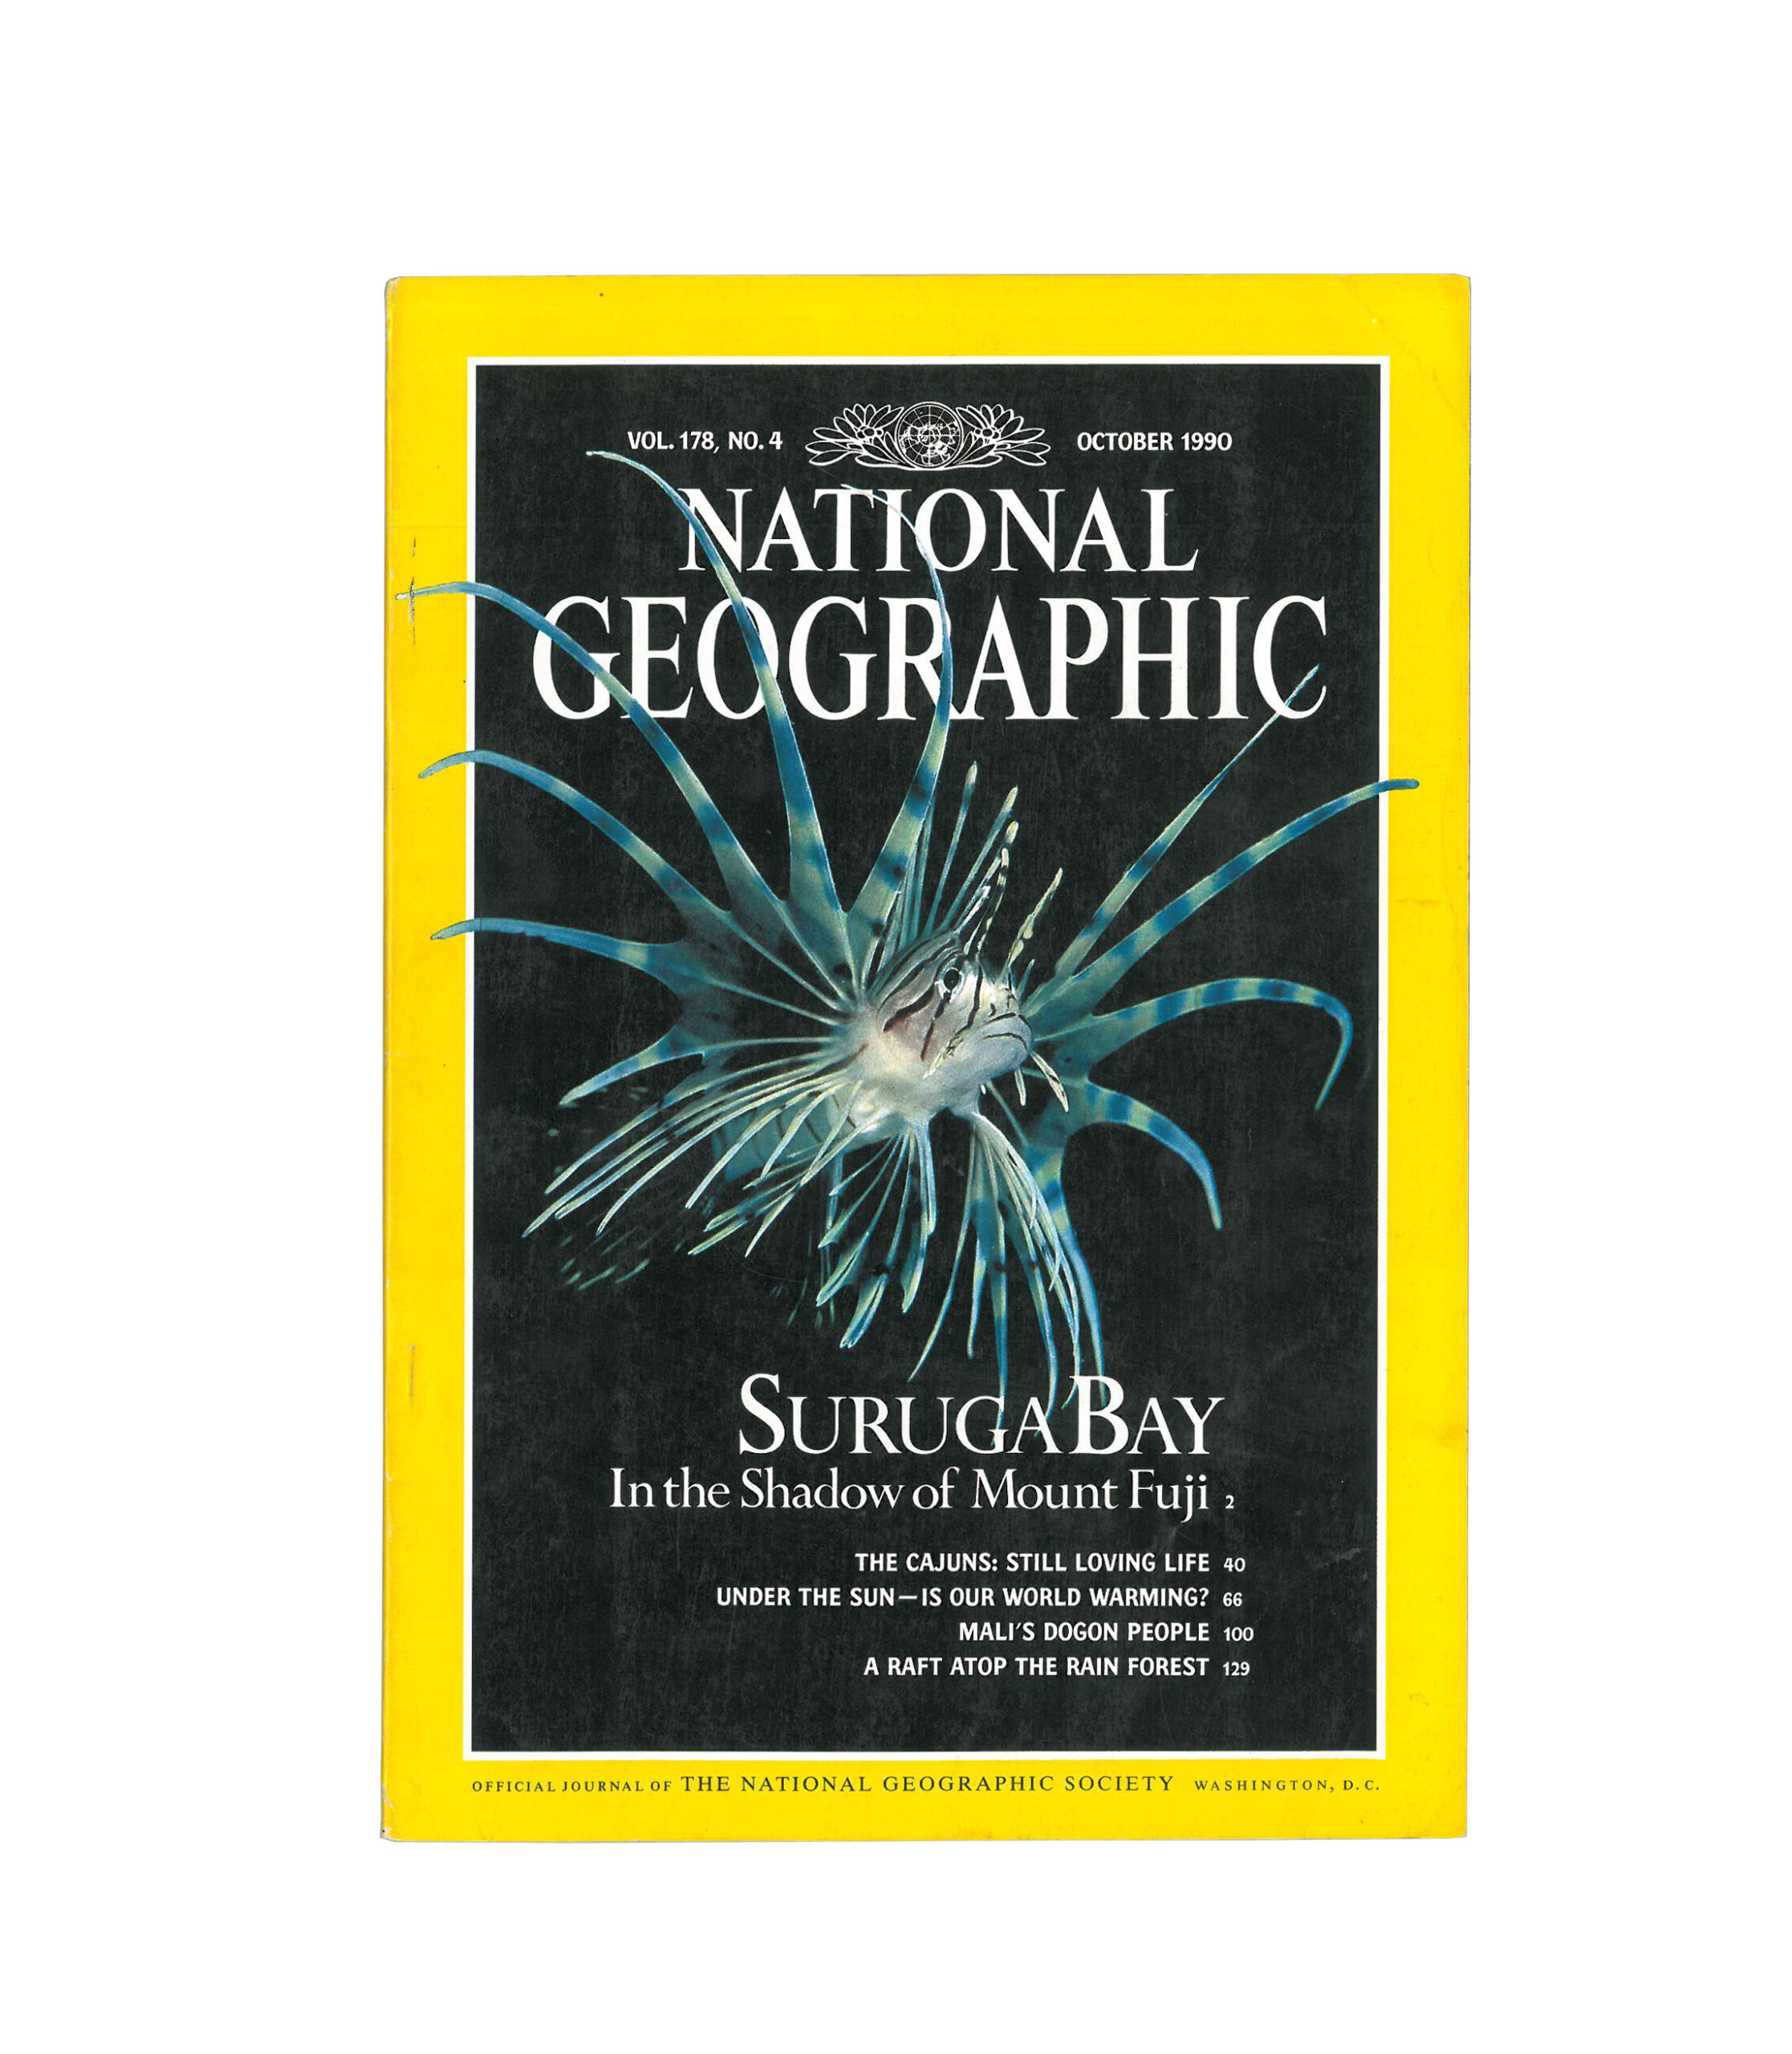 National Geograpfic 4 OCTOBER 1990